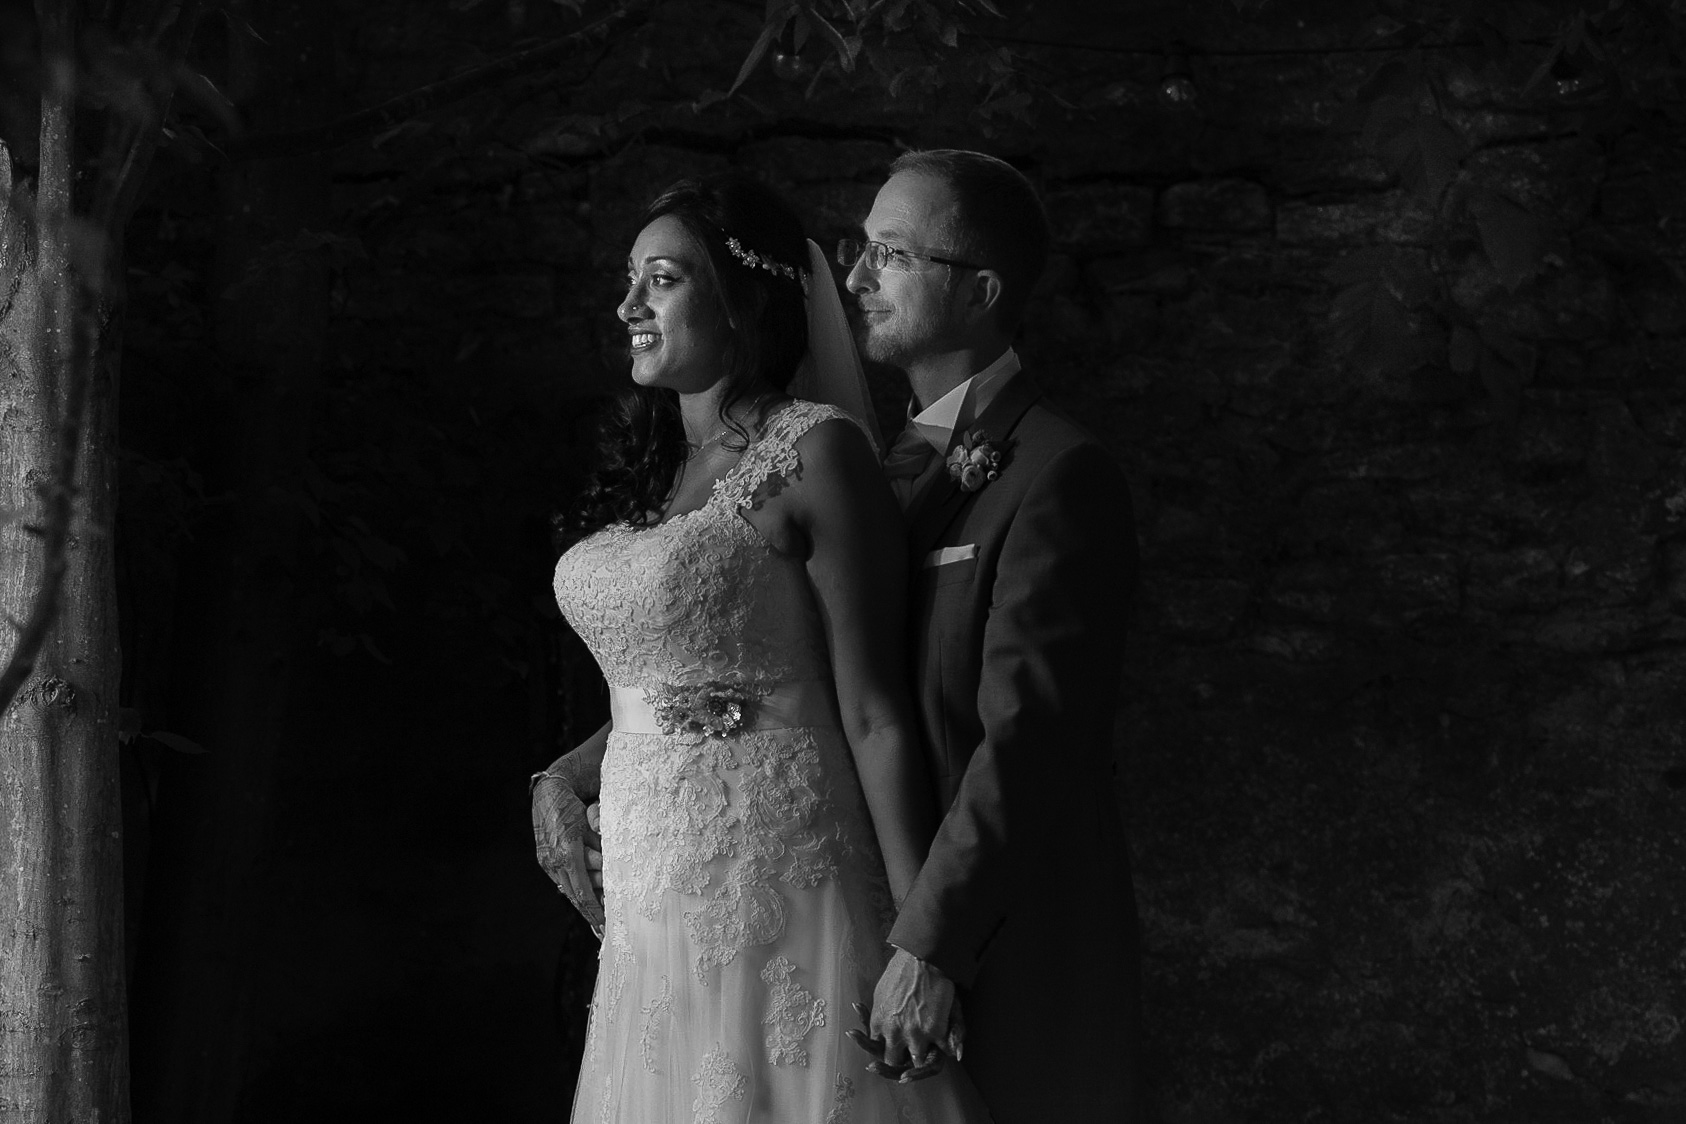 Romantic black and white wedding photography